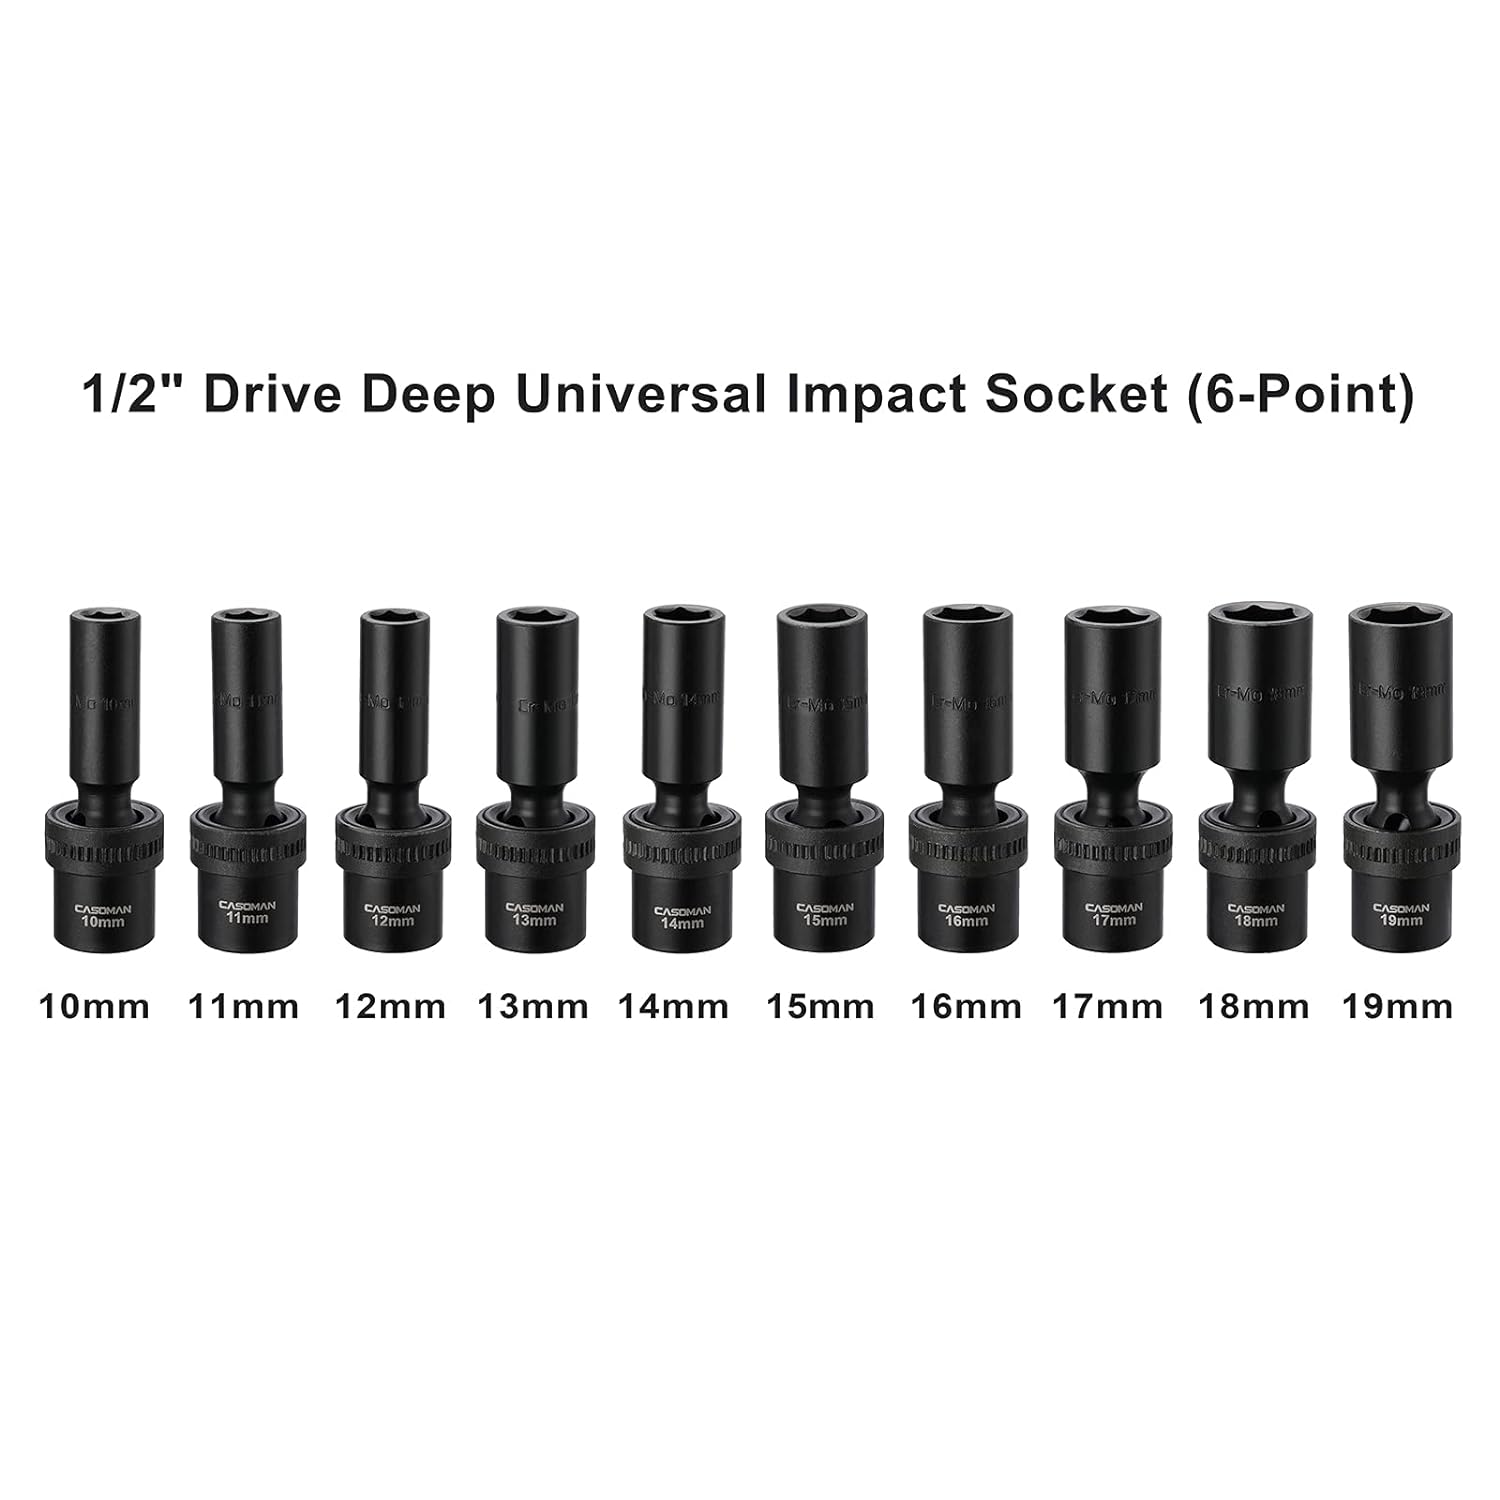 CASOMAN 10 PCS 1/2" Drive Deep Universal Impact Socket Set, Metric,10-19mm